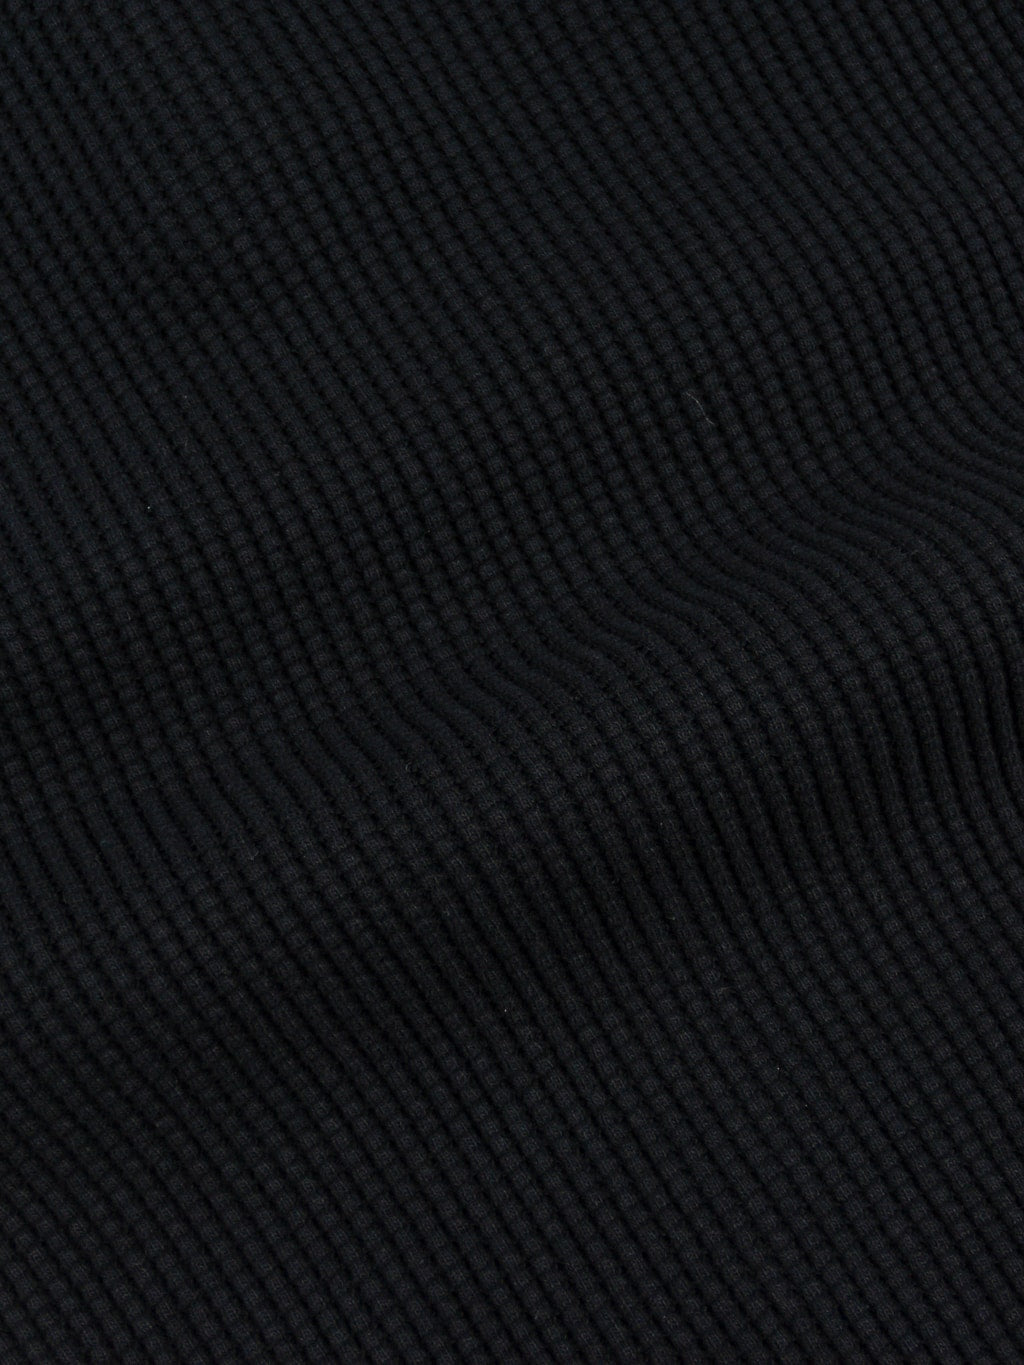 UES Thermal Big Waffle Henley TShirt Black cotton fabric knit